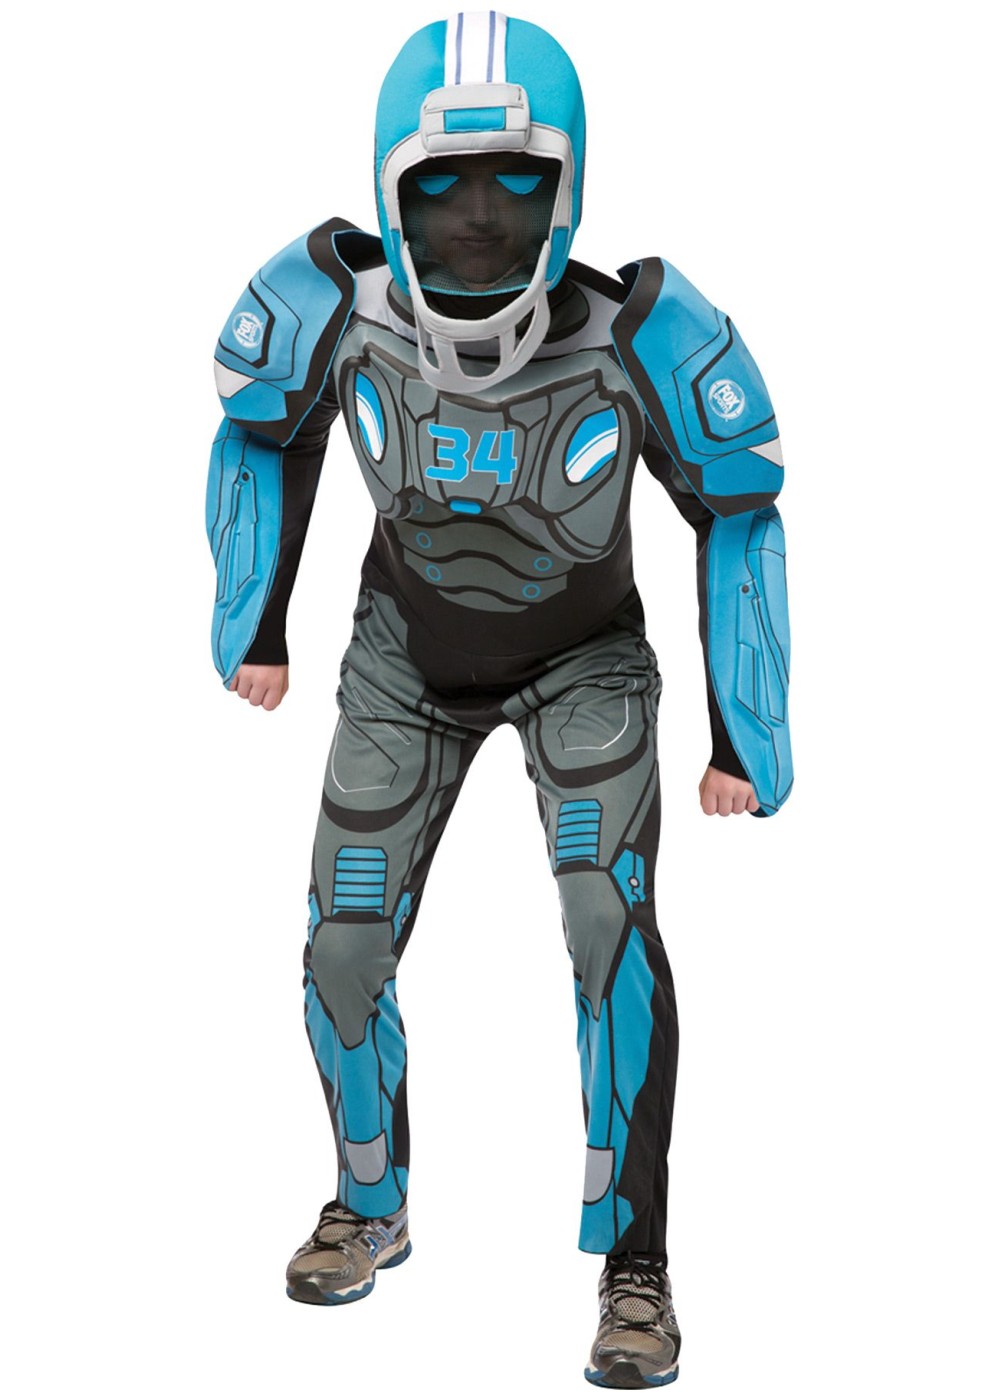  Mens Sports Robot Costume